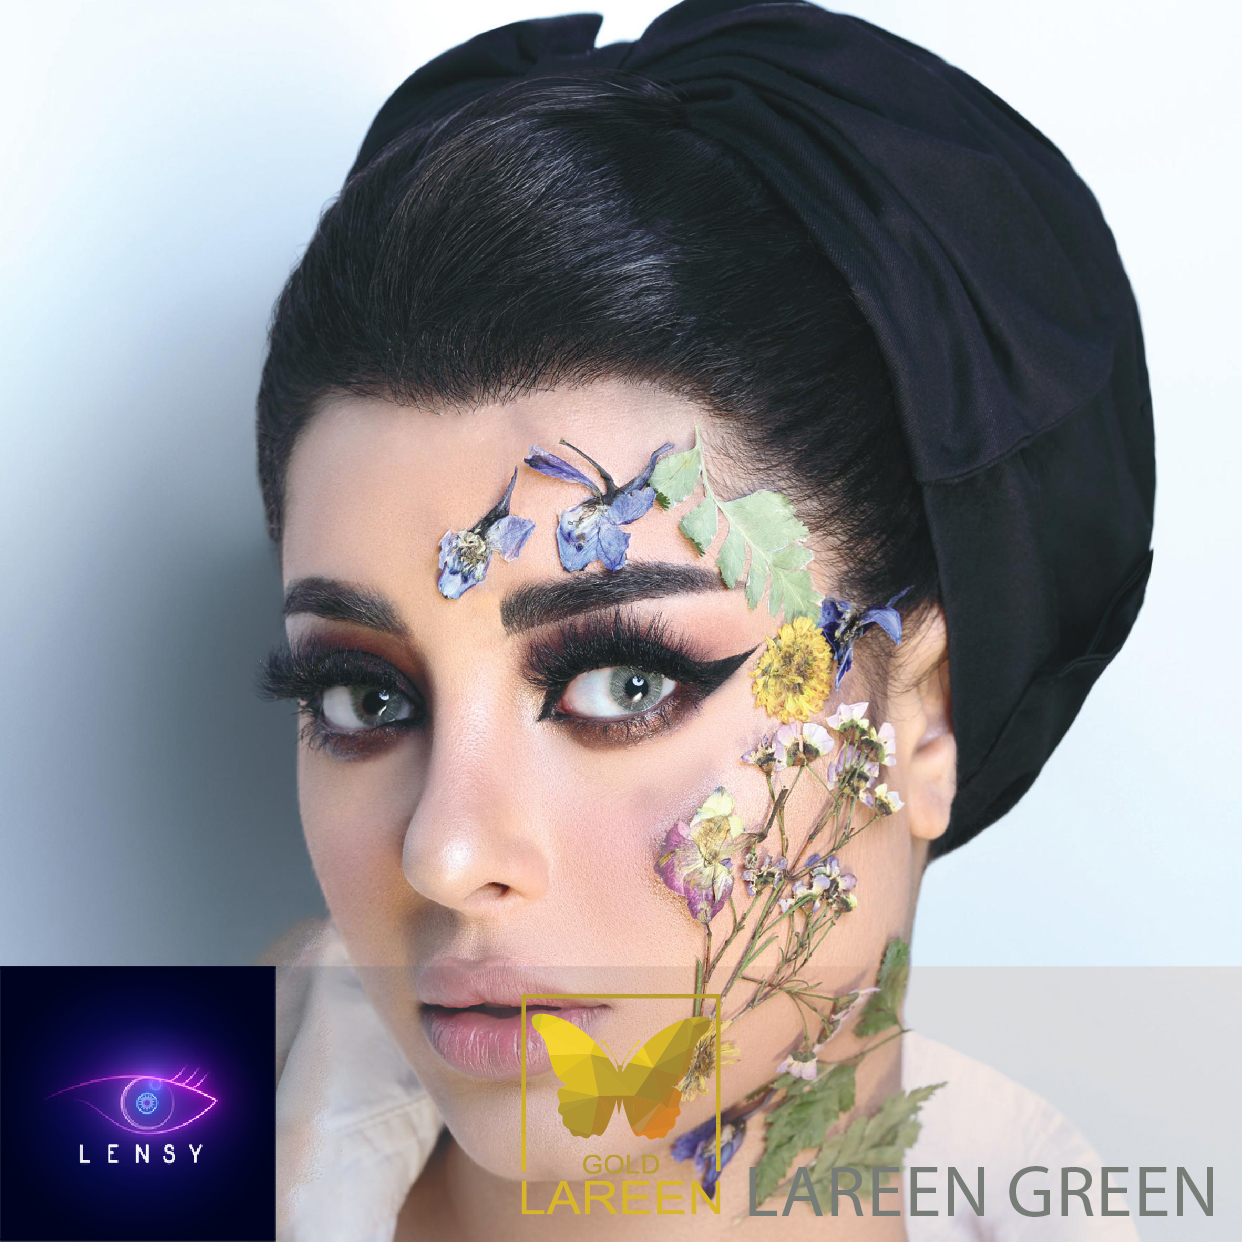 Lareen Green